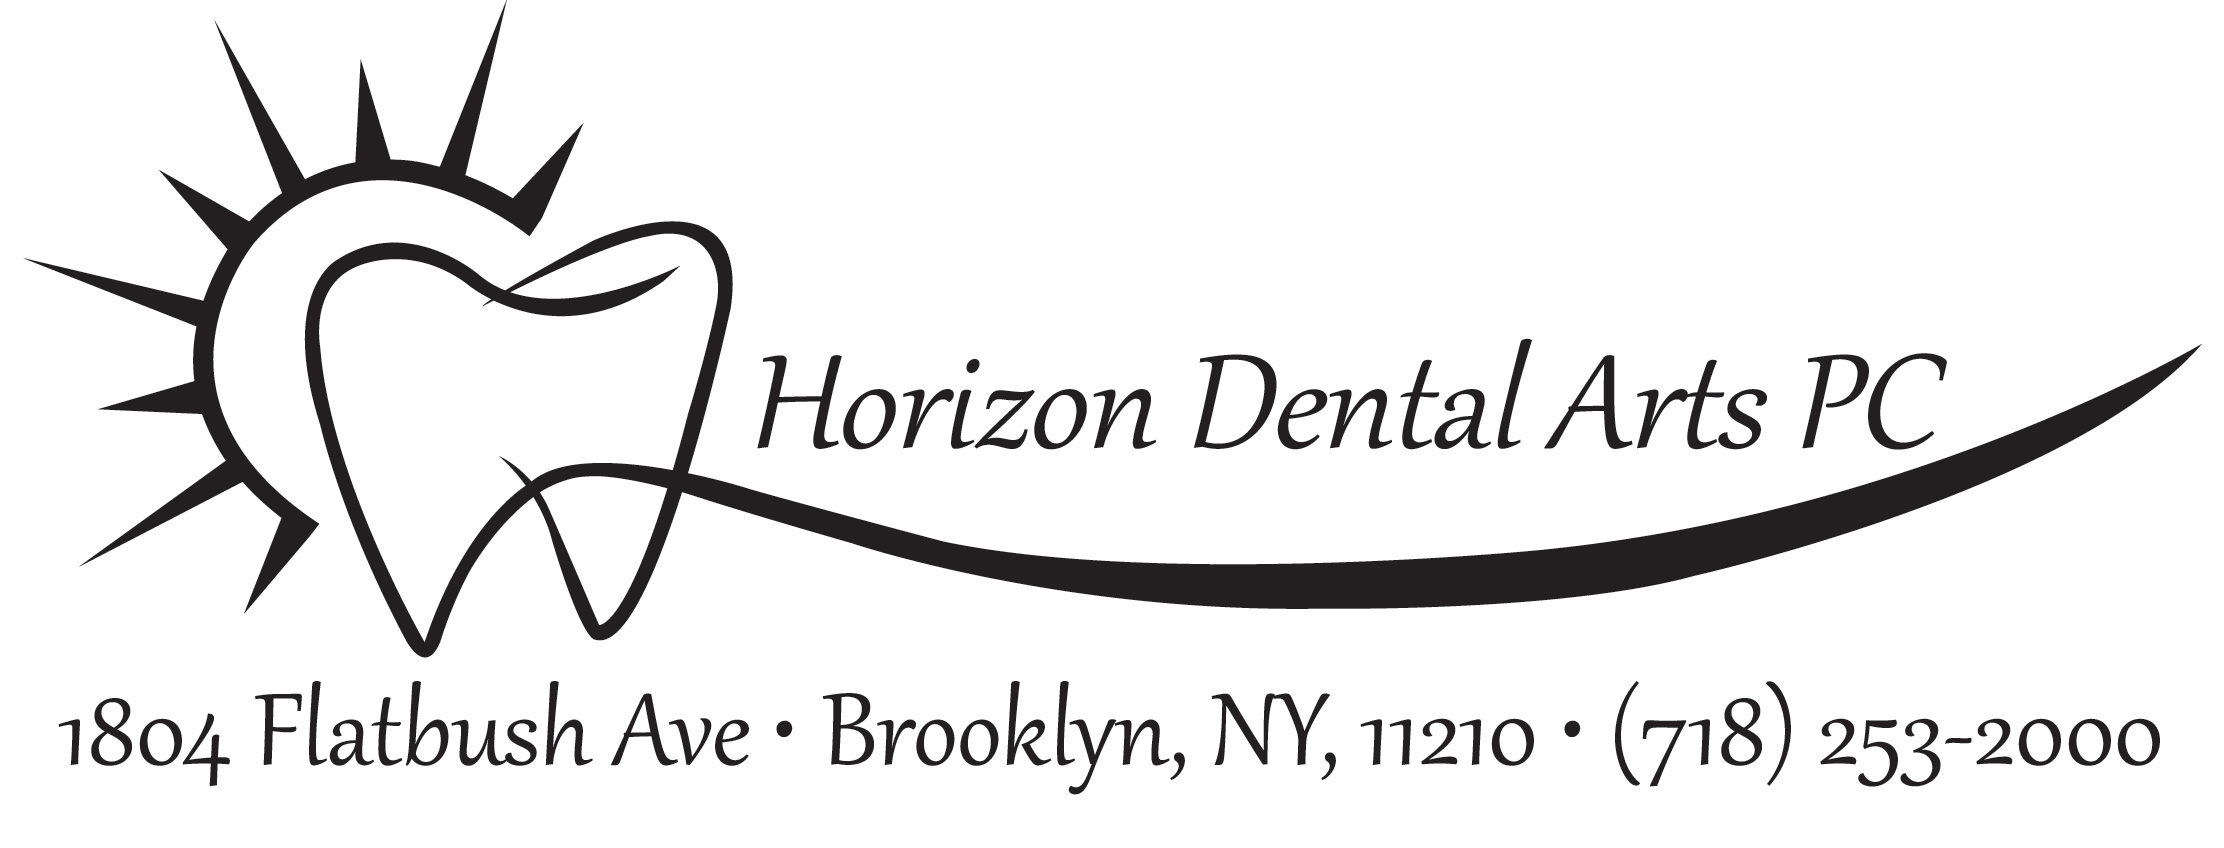 Horizon Dental Arts PC, Dr. Angelica Iancu DDS